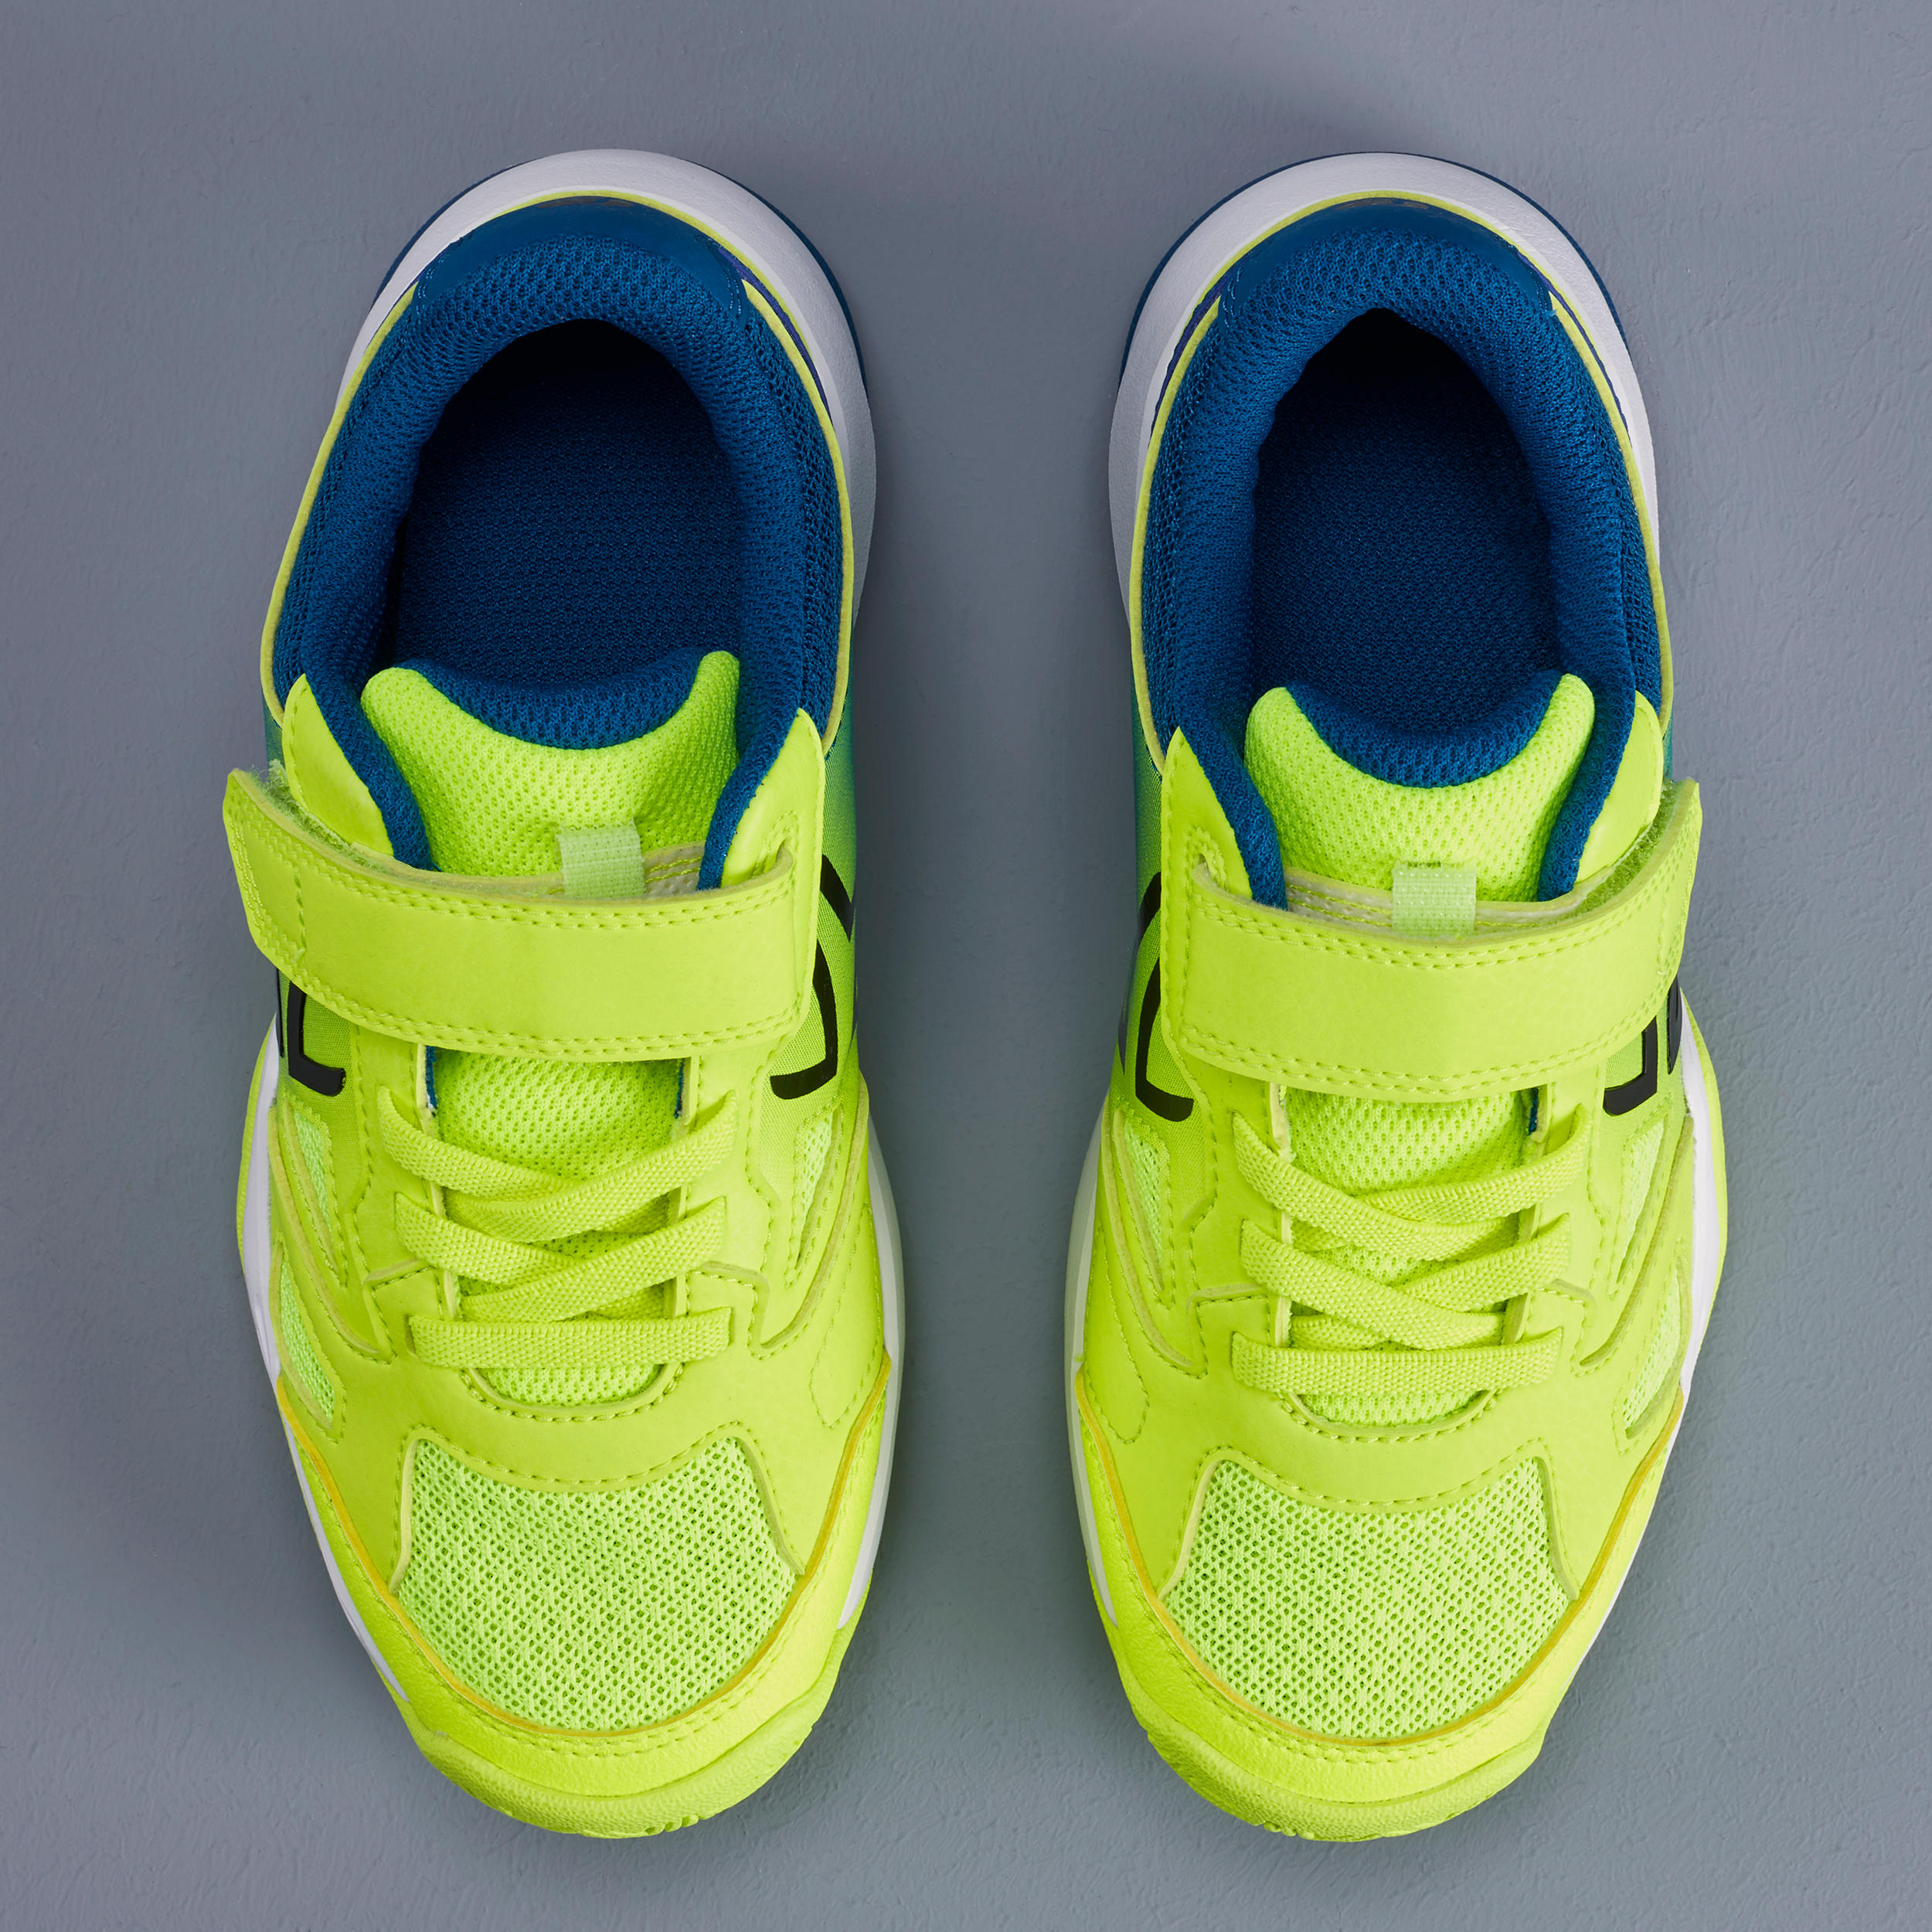 TS560 KD Kids' Tennis Shoes - Blue/Yellow 9/9